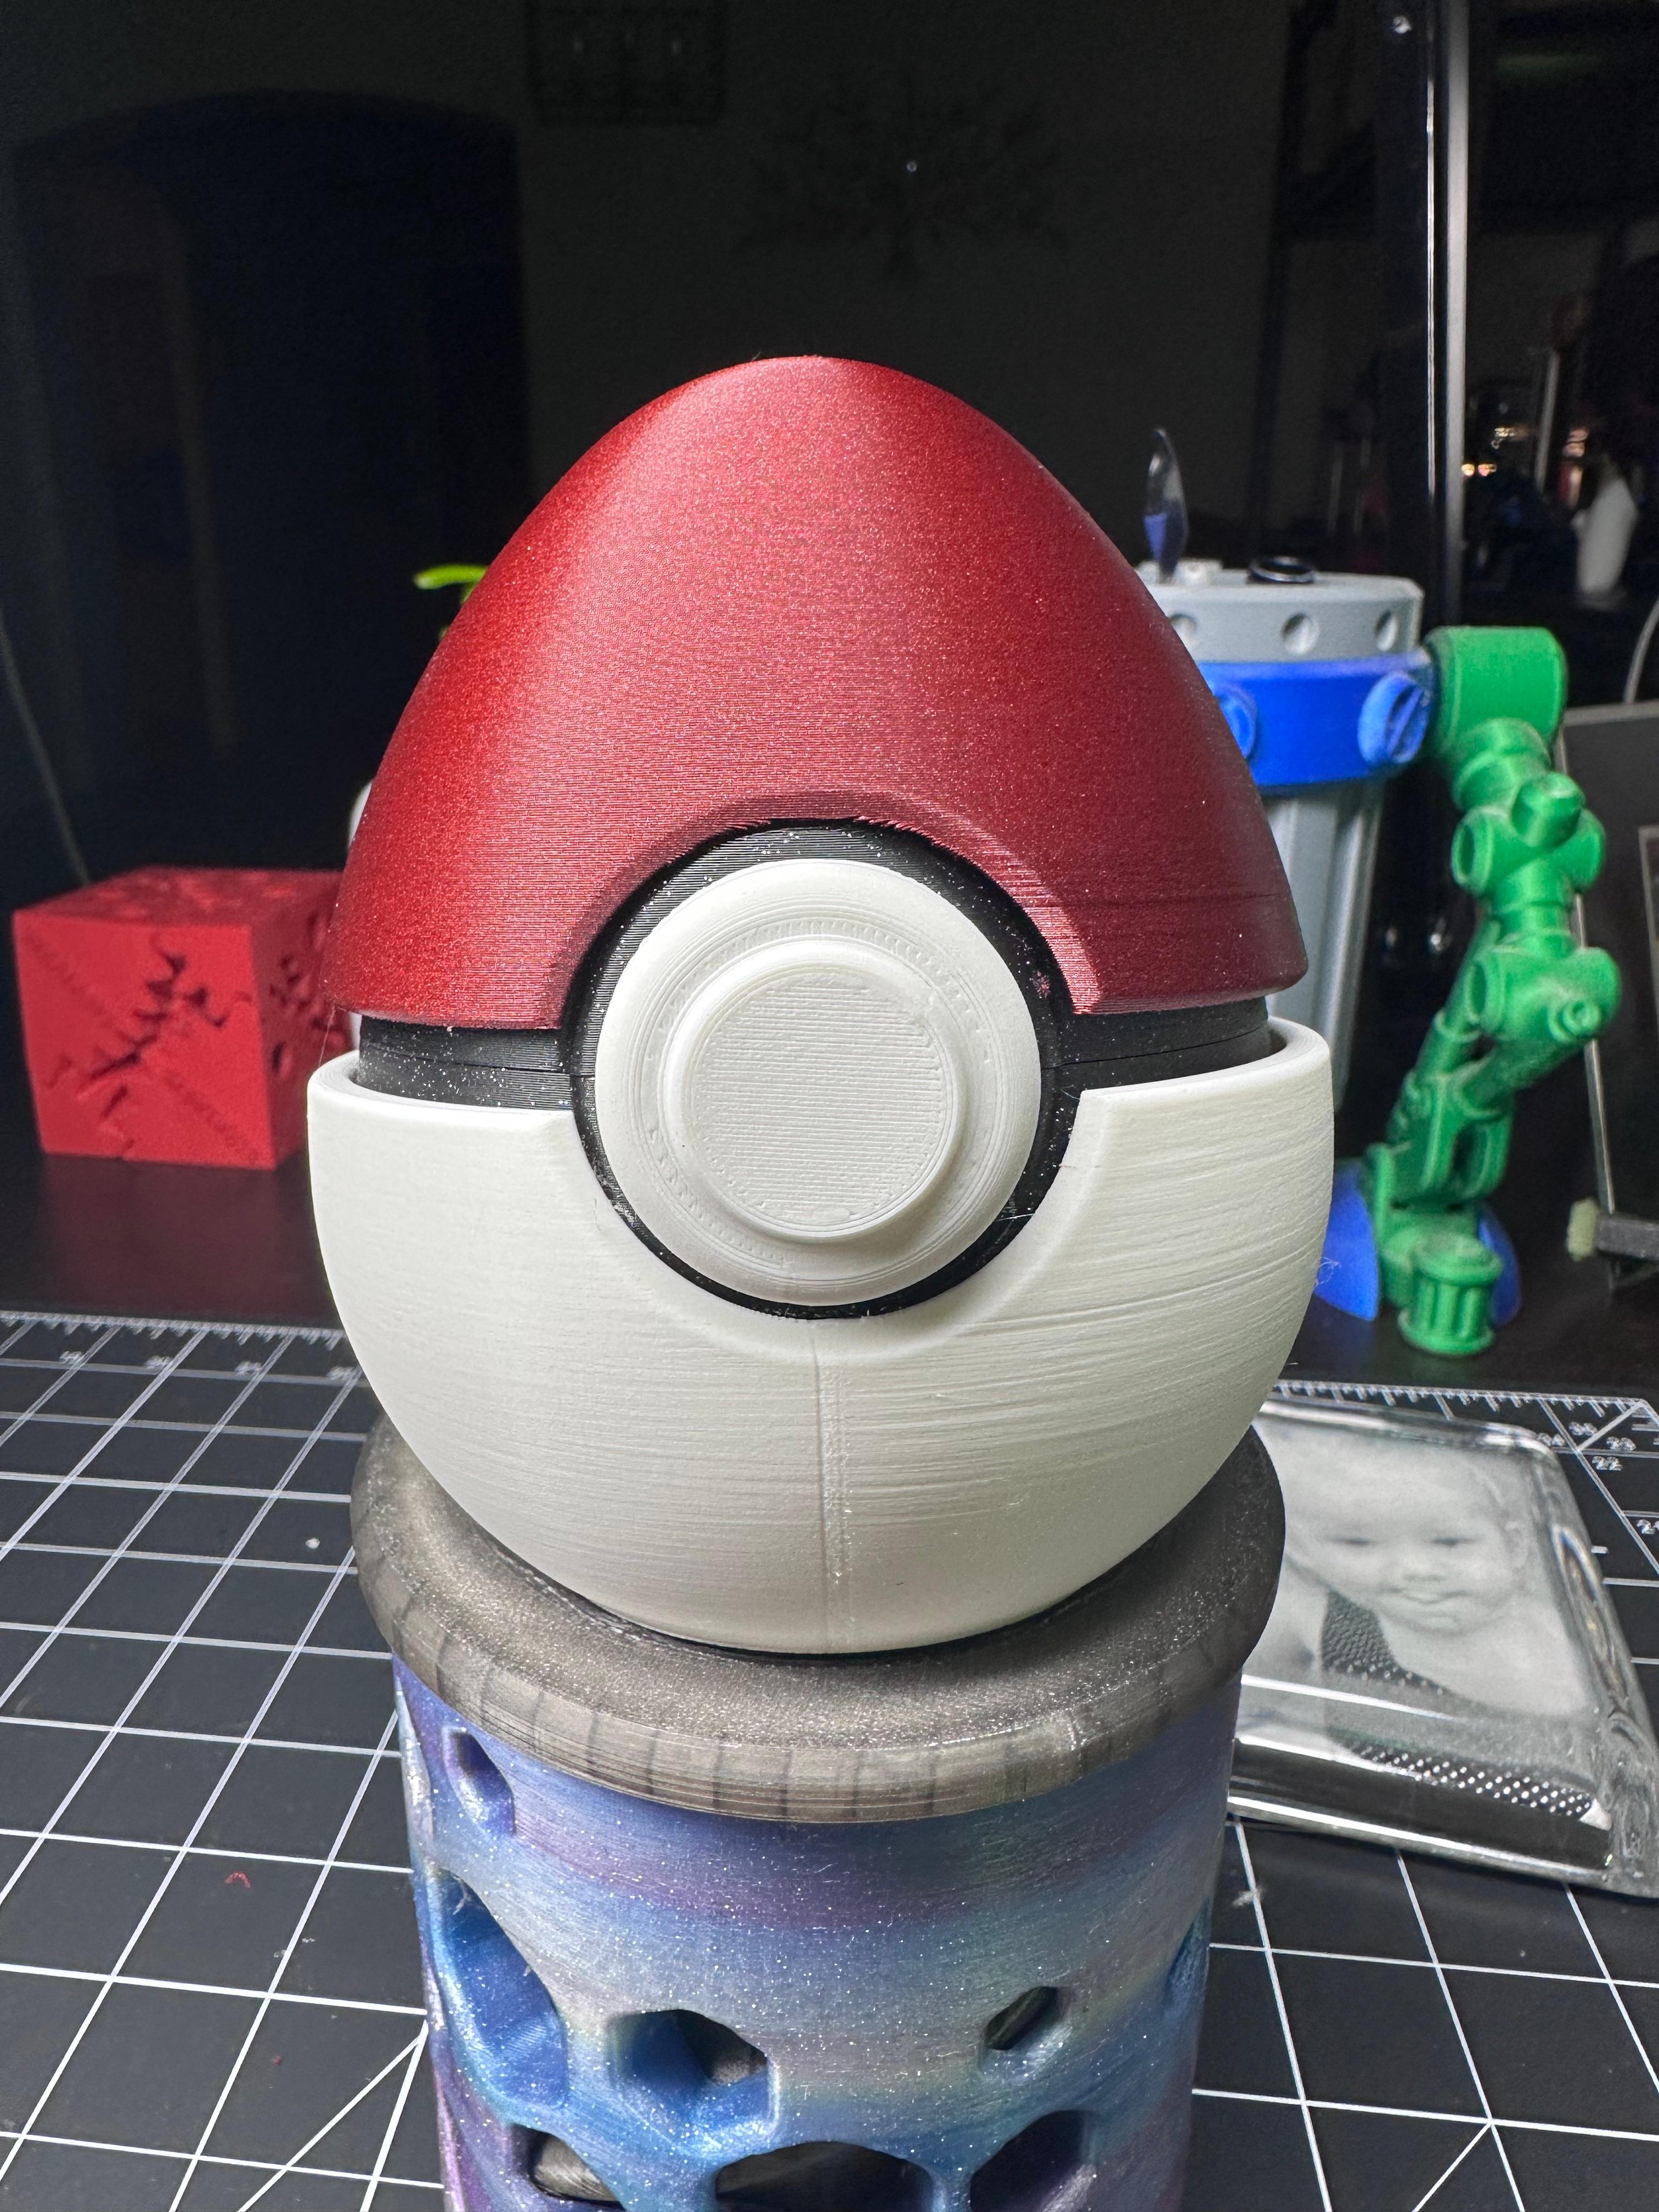 Pokemon - Print in Place Articulating Egg in the spirit of the "Pokeball Egg" or PokeEgg 3d model